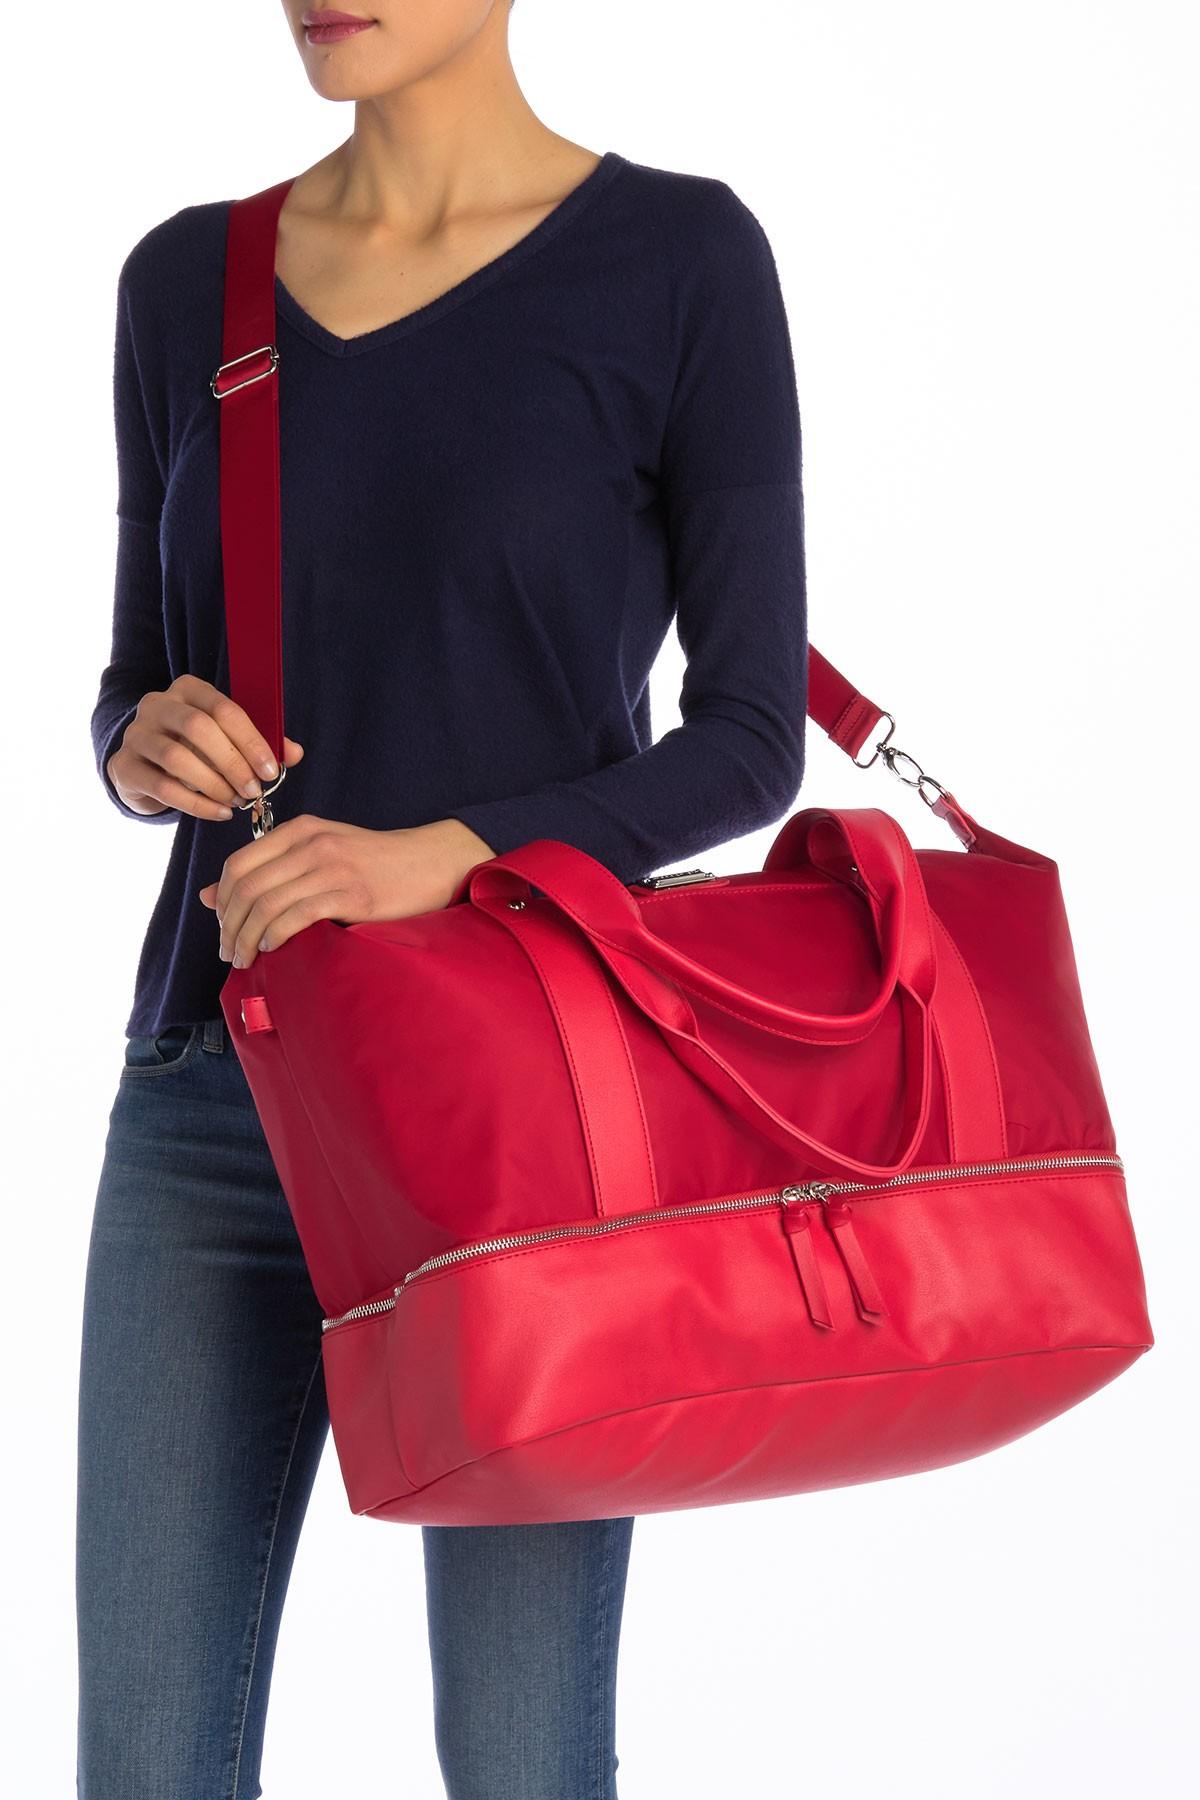 Madden Girl Weekend Duffel Bag in Red